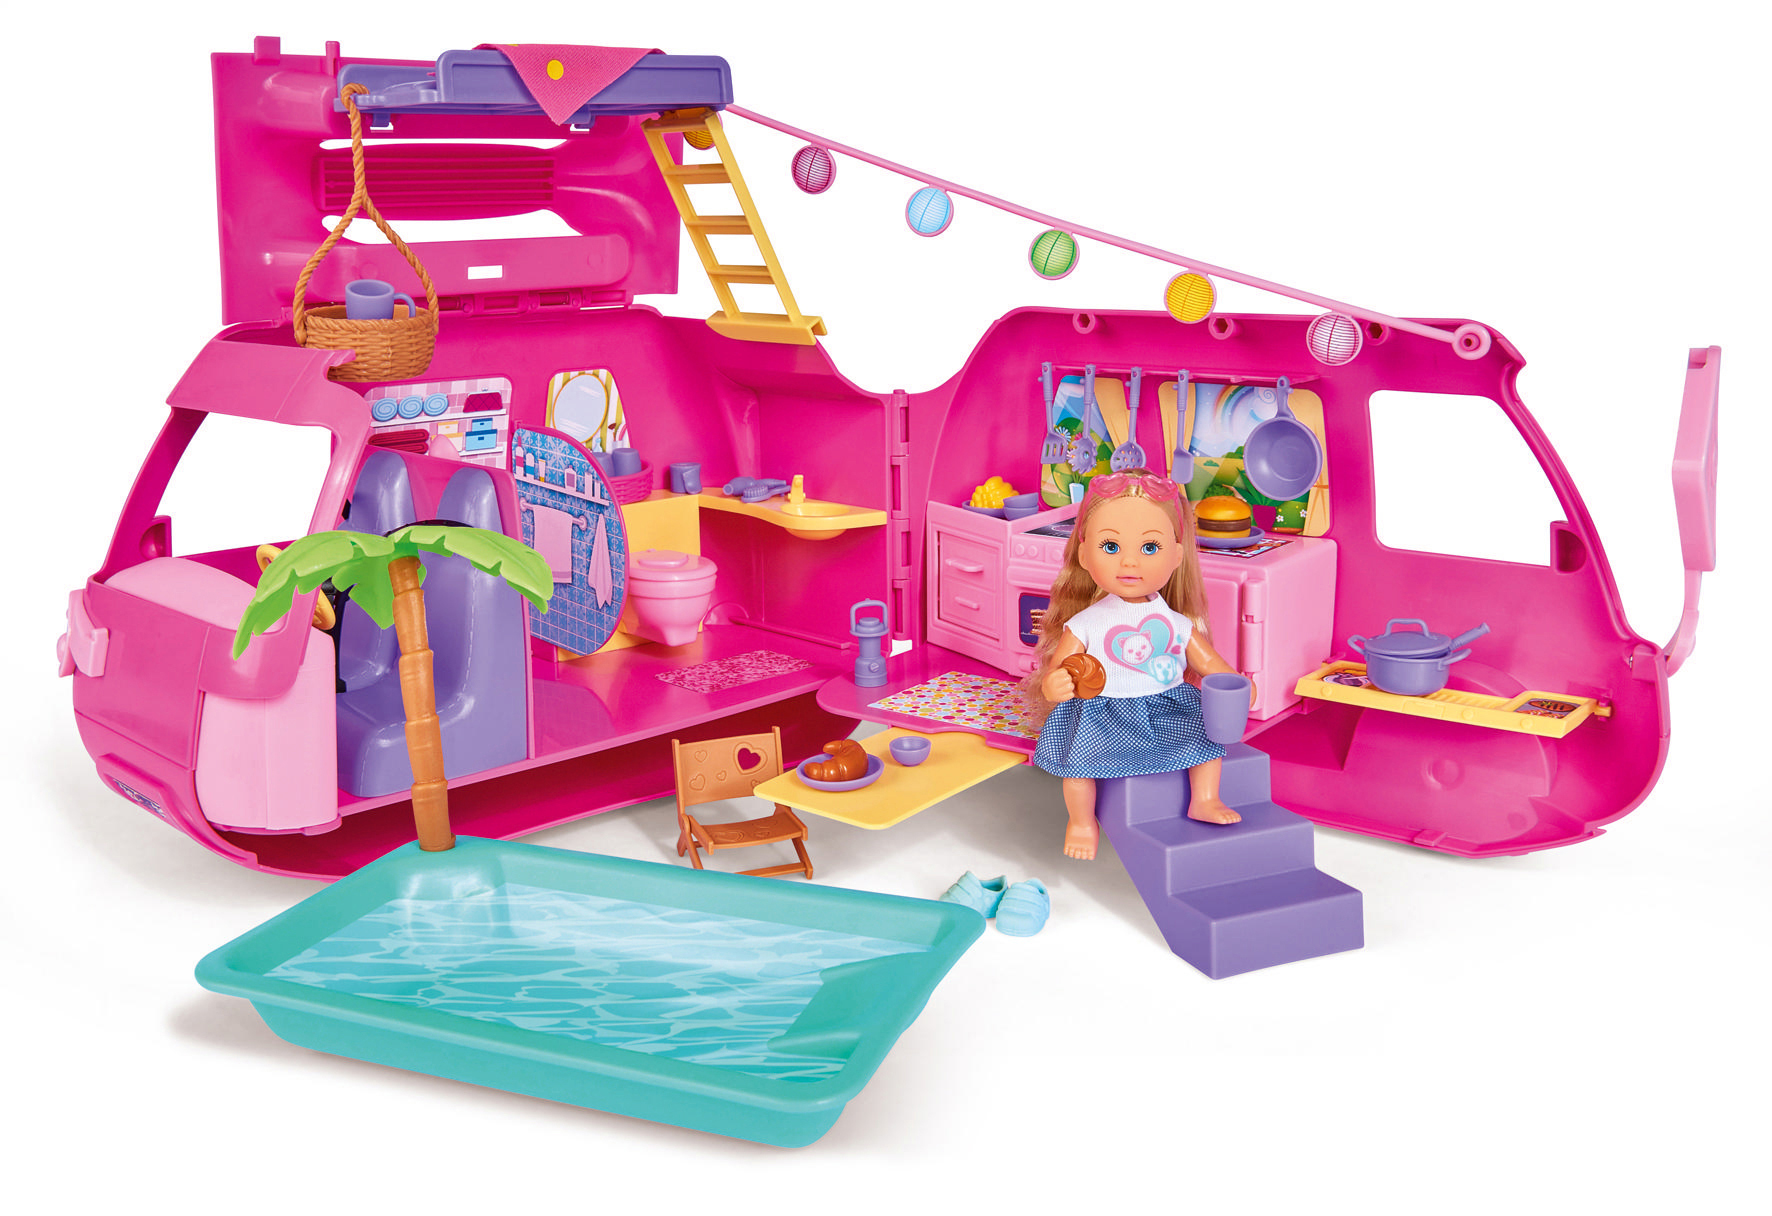 SIMBA EL Spielzeugset Wohnmobil TOYS Ferienspaß Mehrfarbig